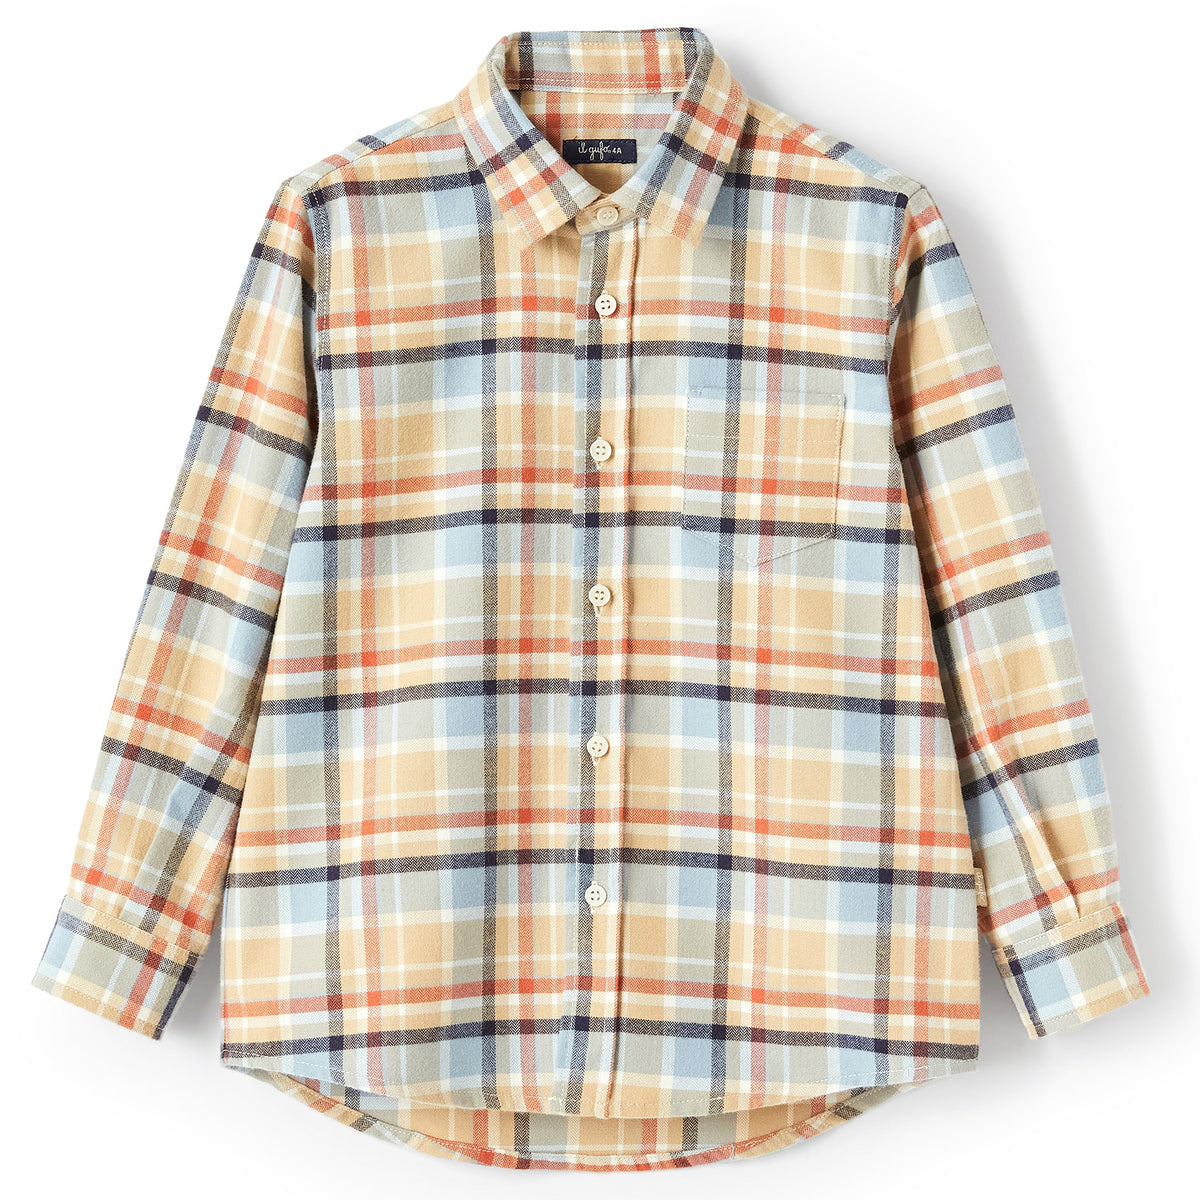 JJJJound Flannel Shirt - Light Beige MSizeMedium